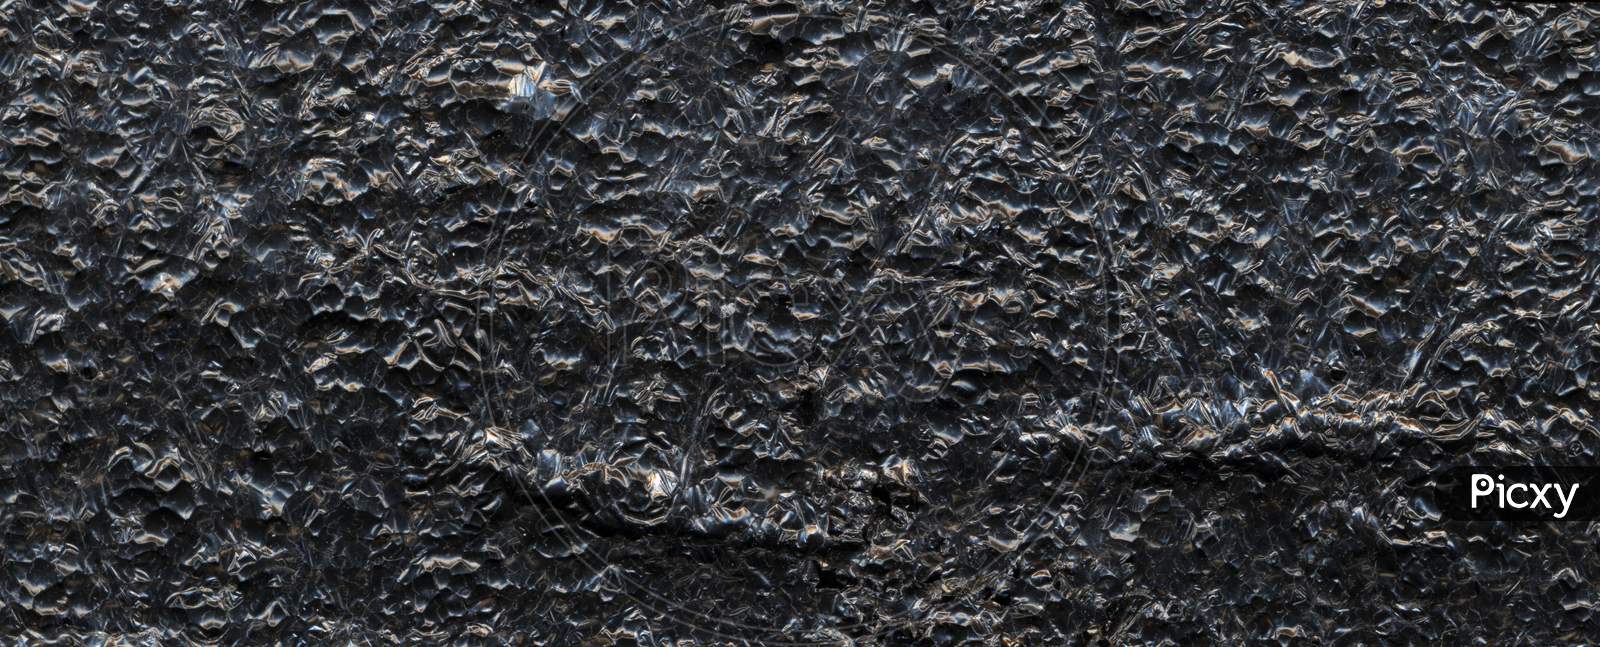 Black Insulation Foam Background